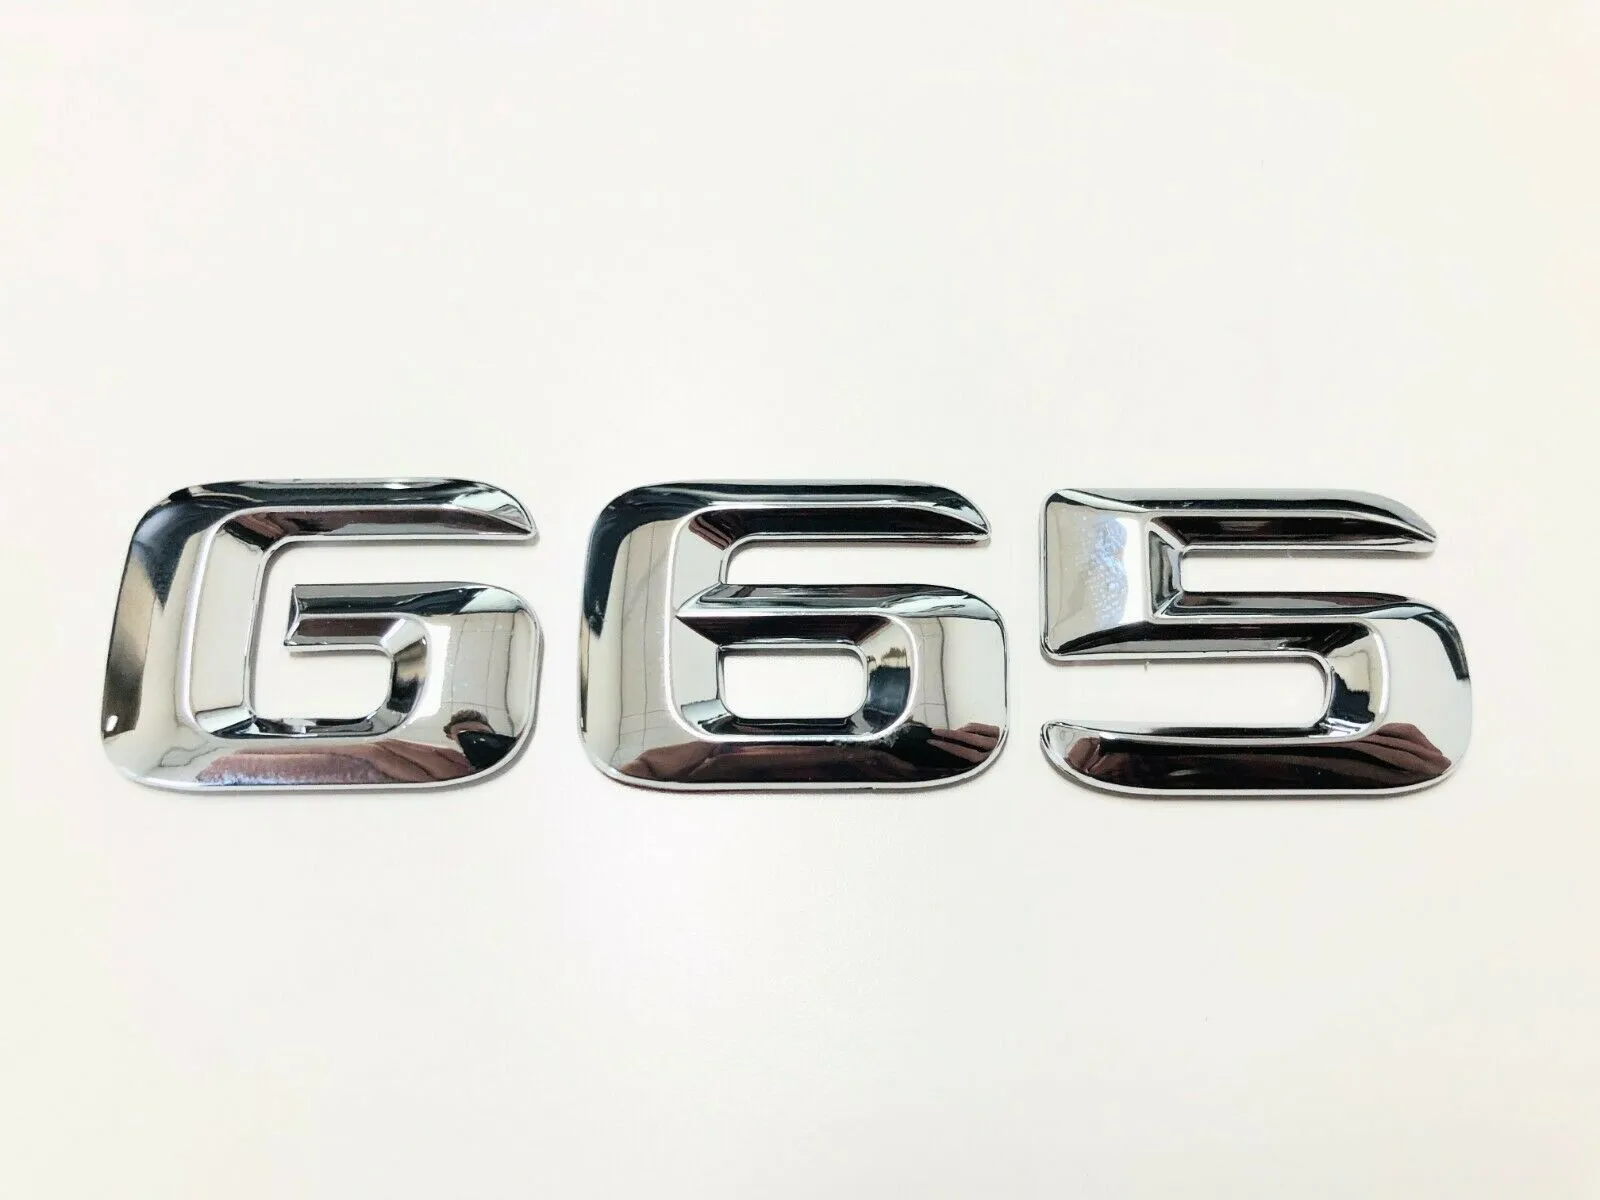 Mercedes G65 G 65